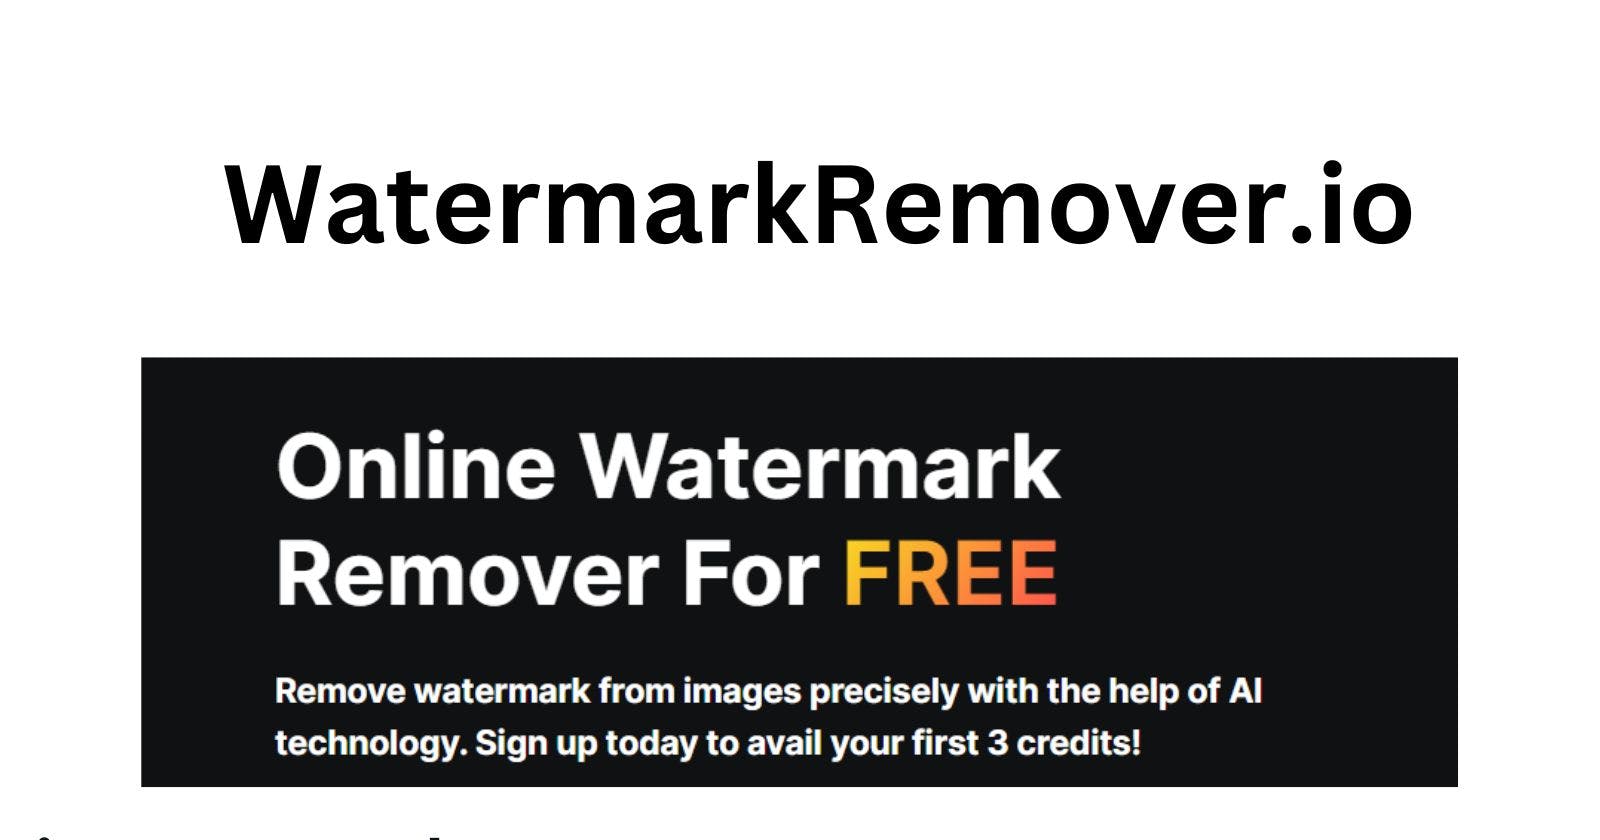 What is WatermarkRemover.io